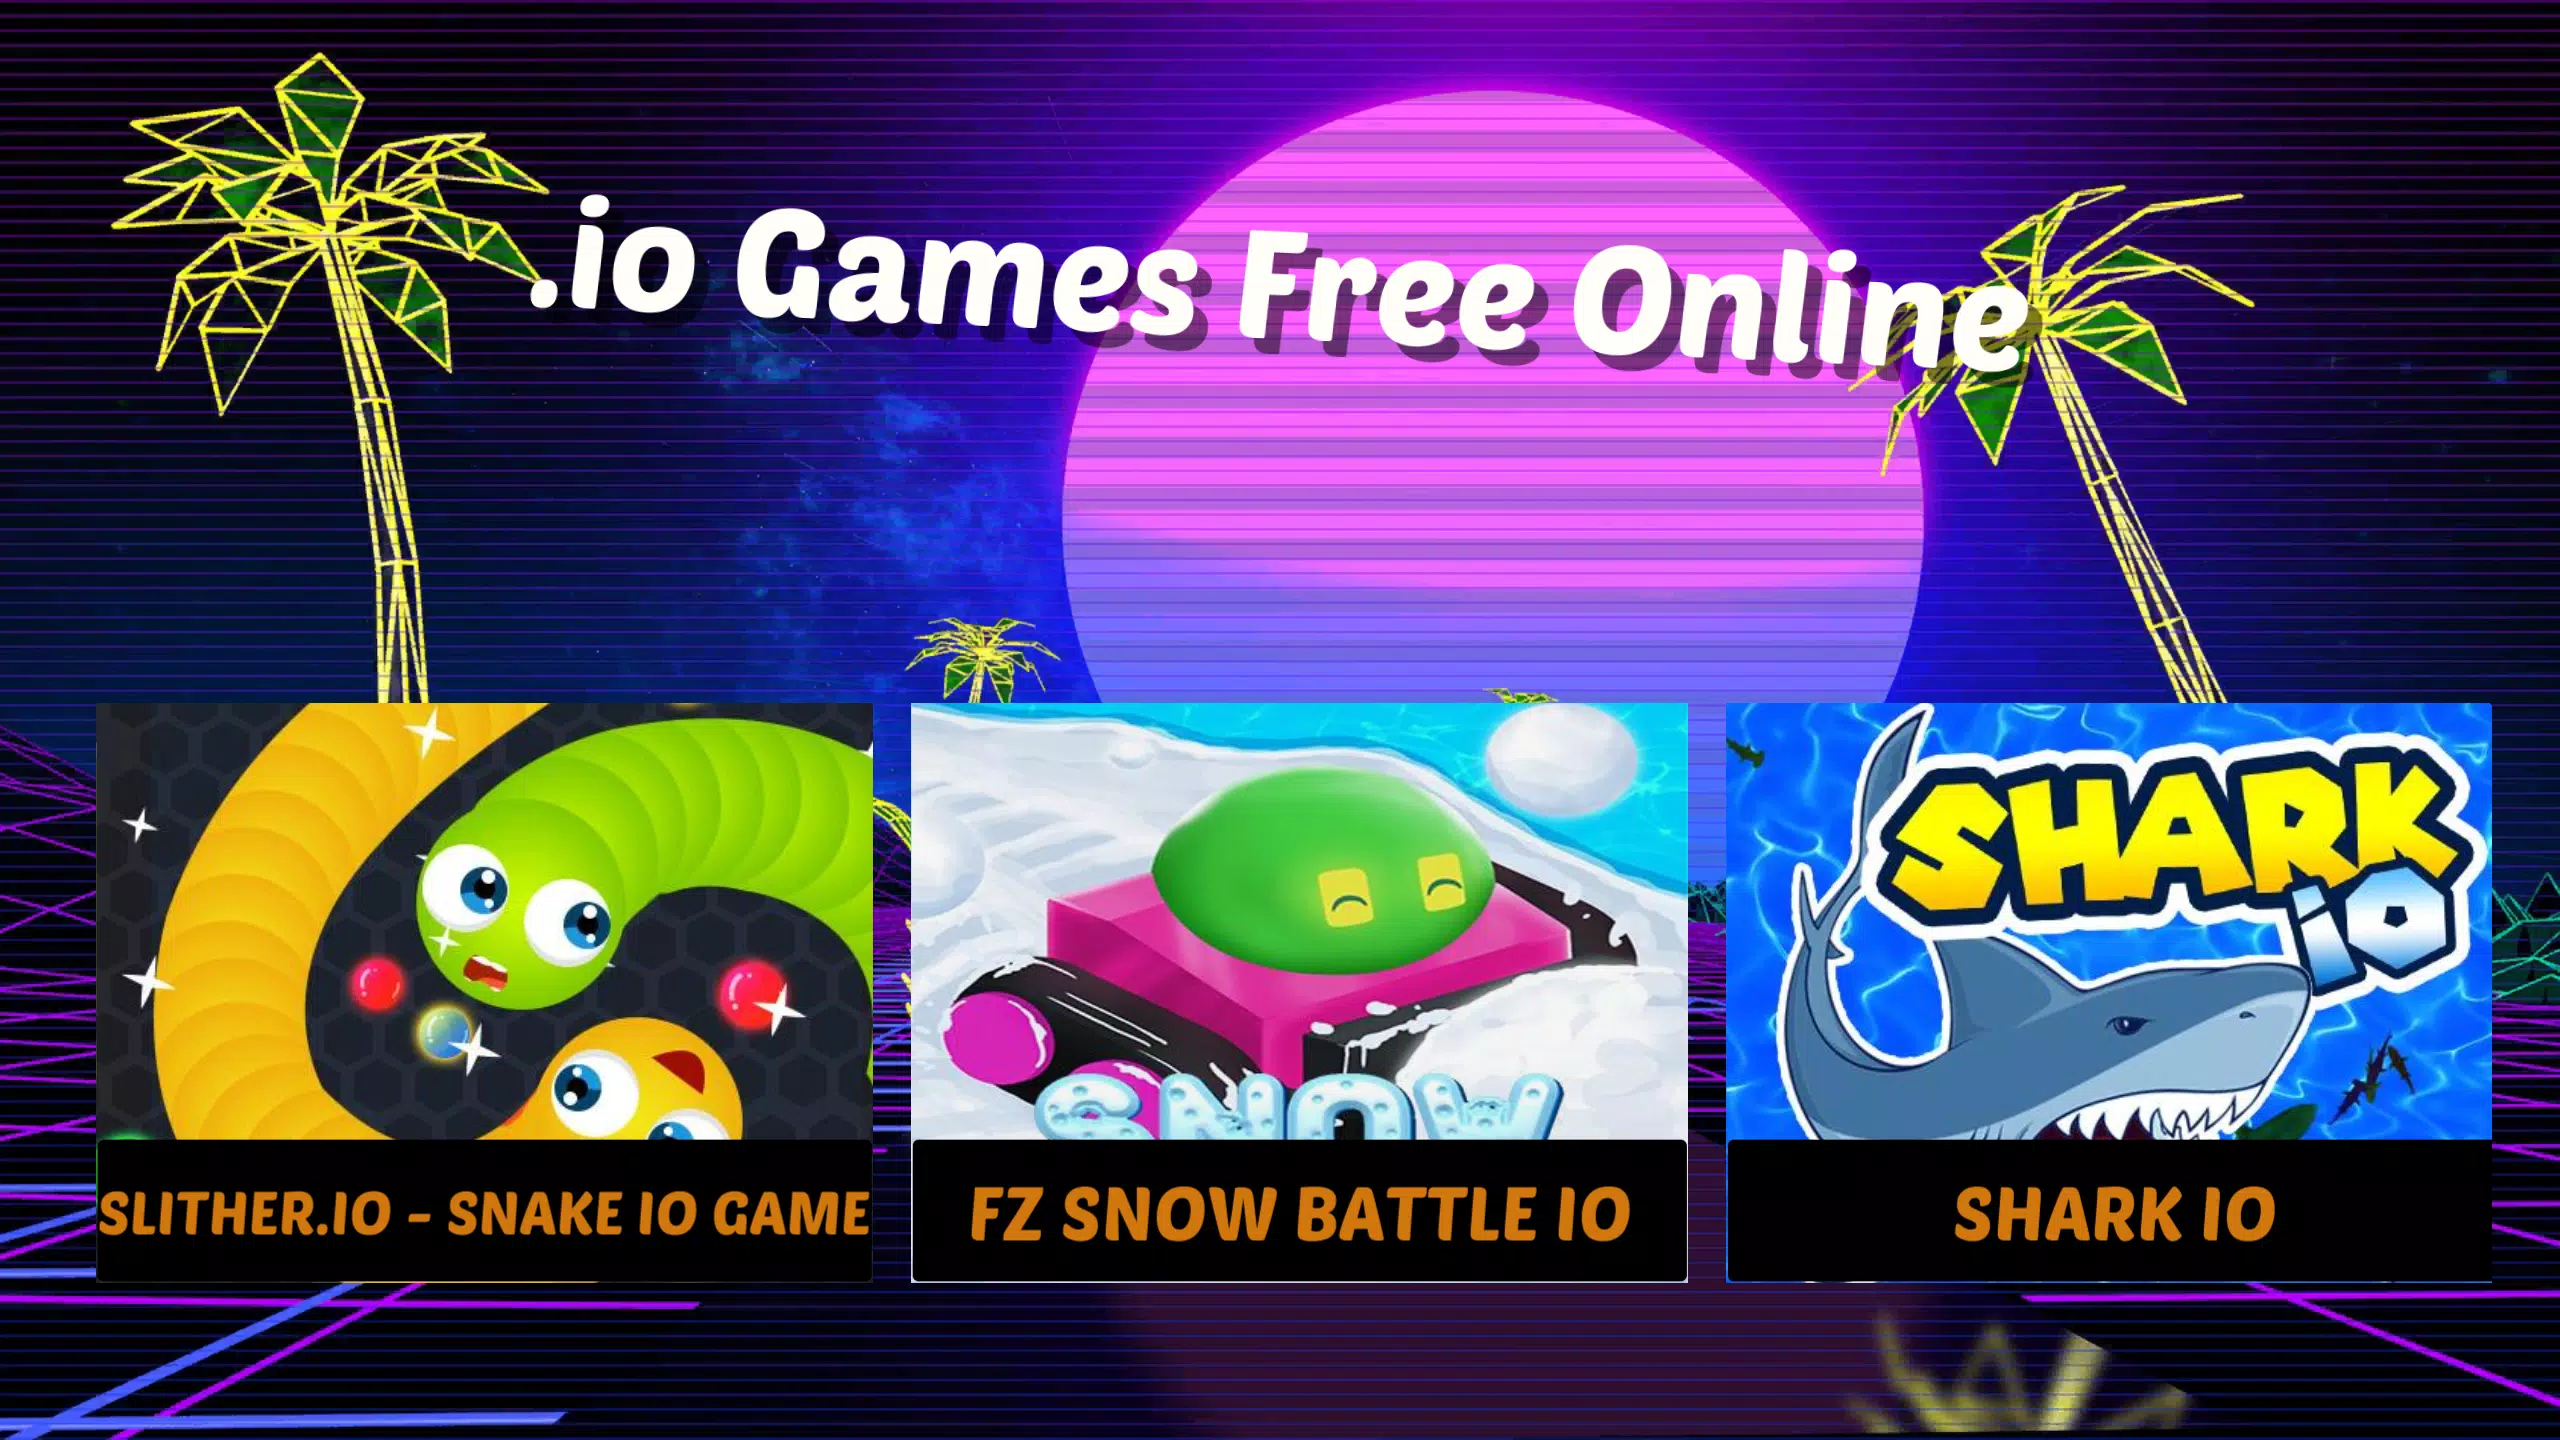 SNOK.IO free online game on